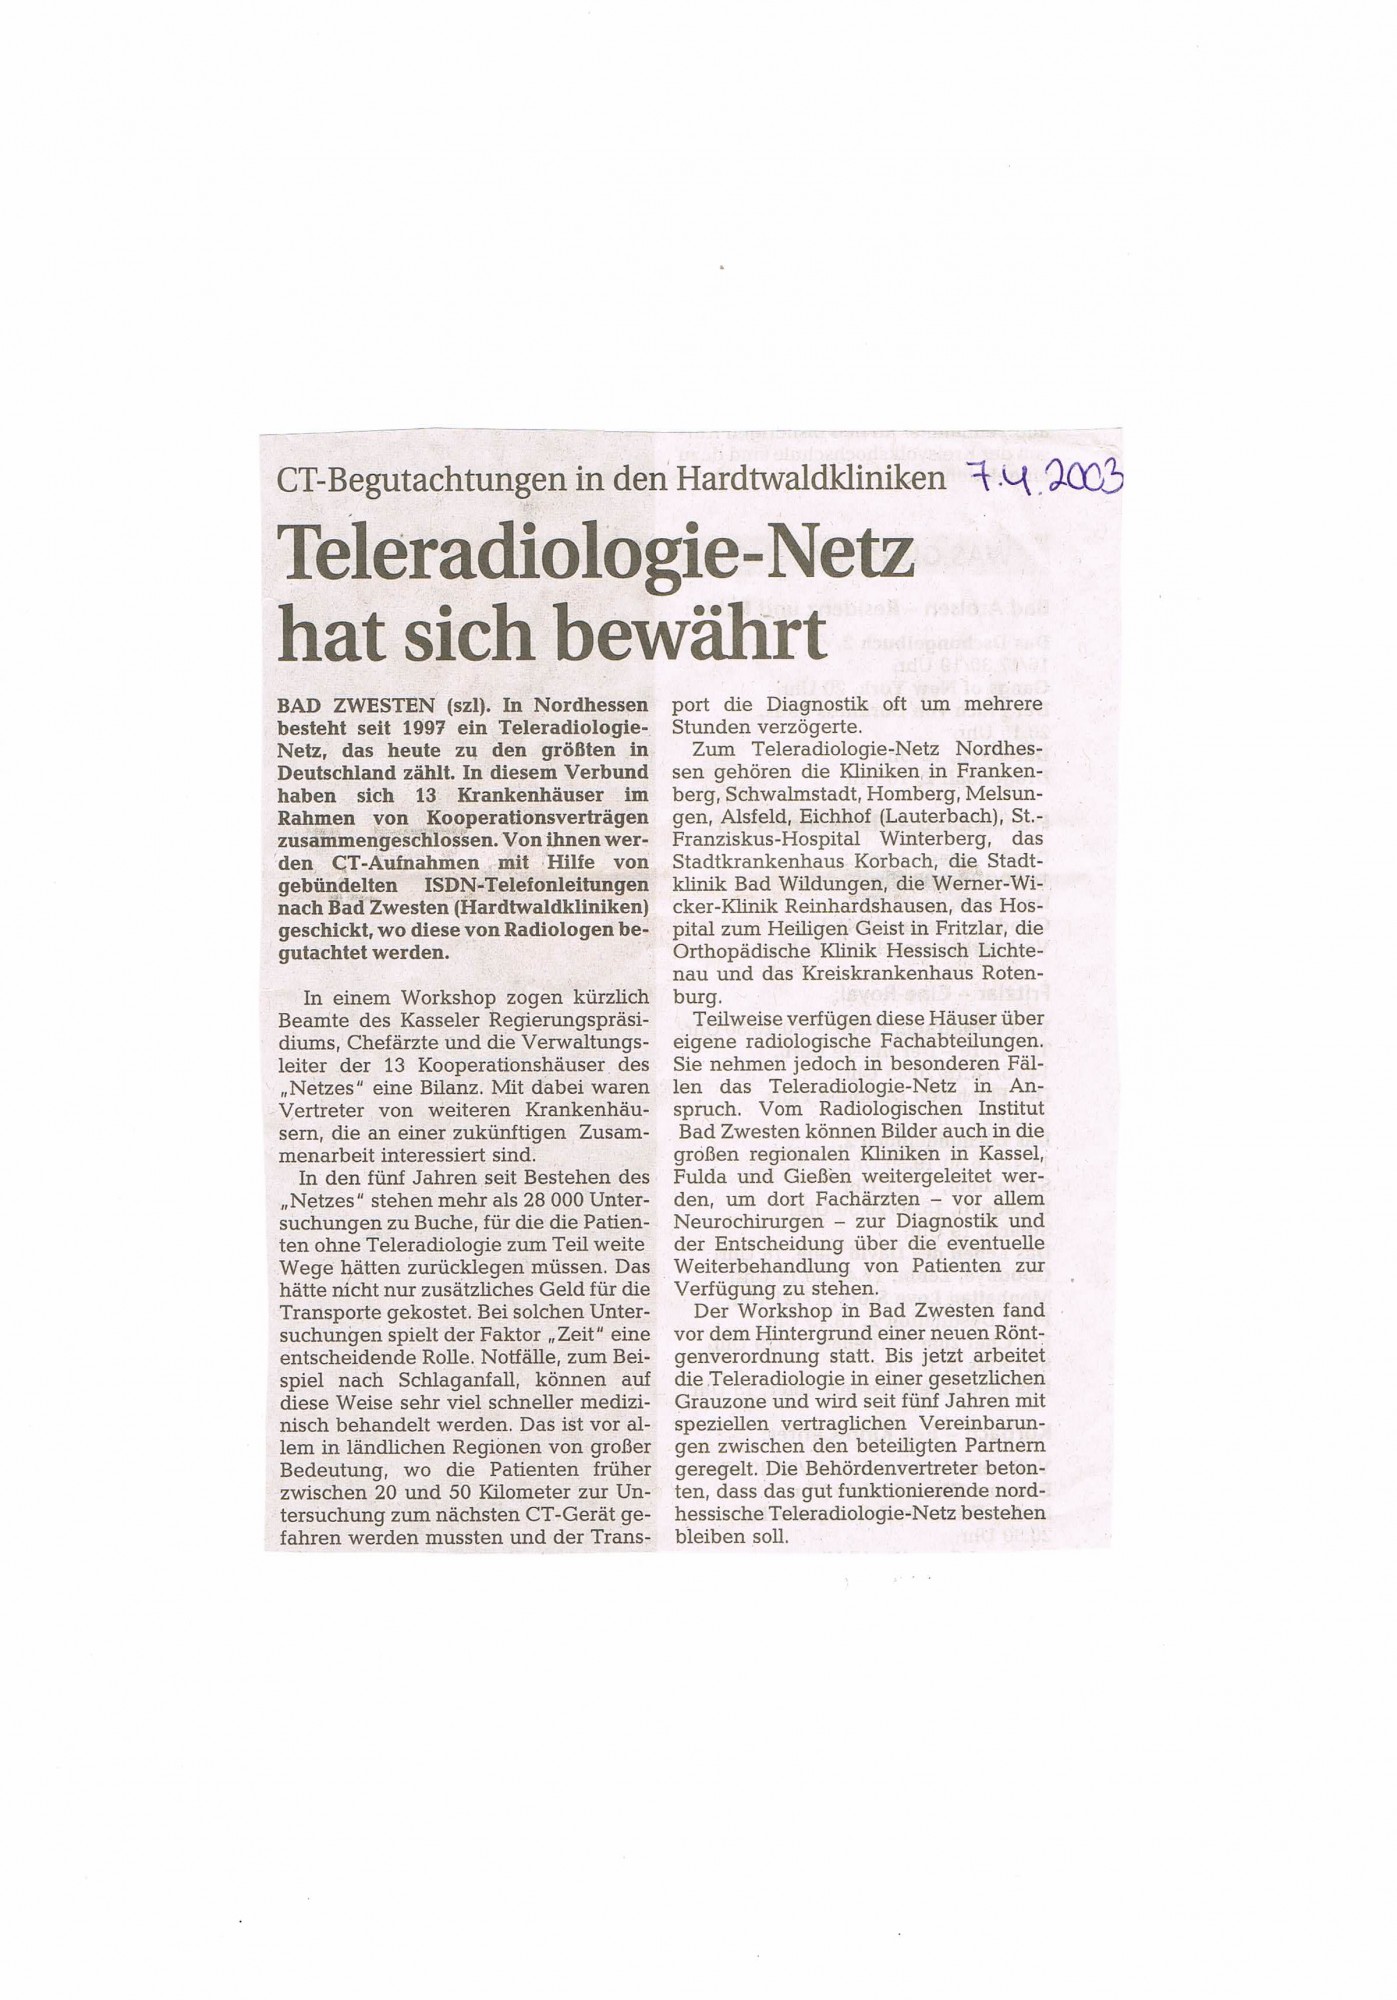 2003-04-07 Teleradiologie-Netz hat sich bewährt-001